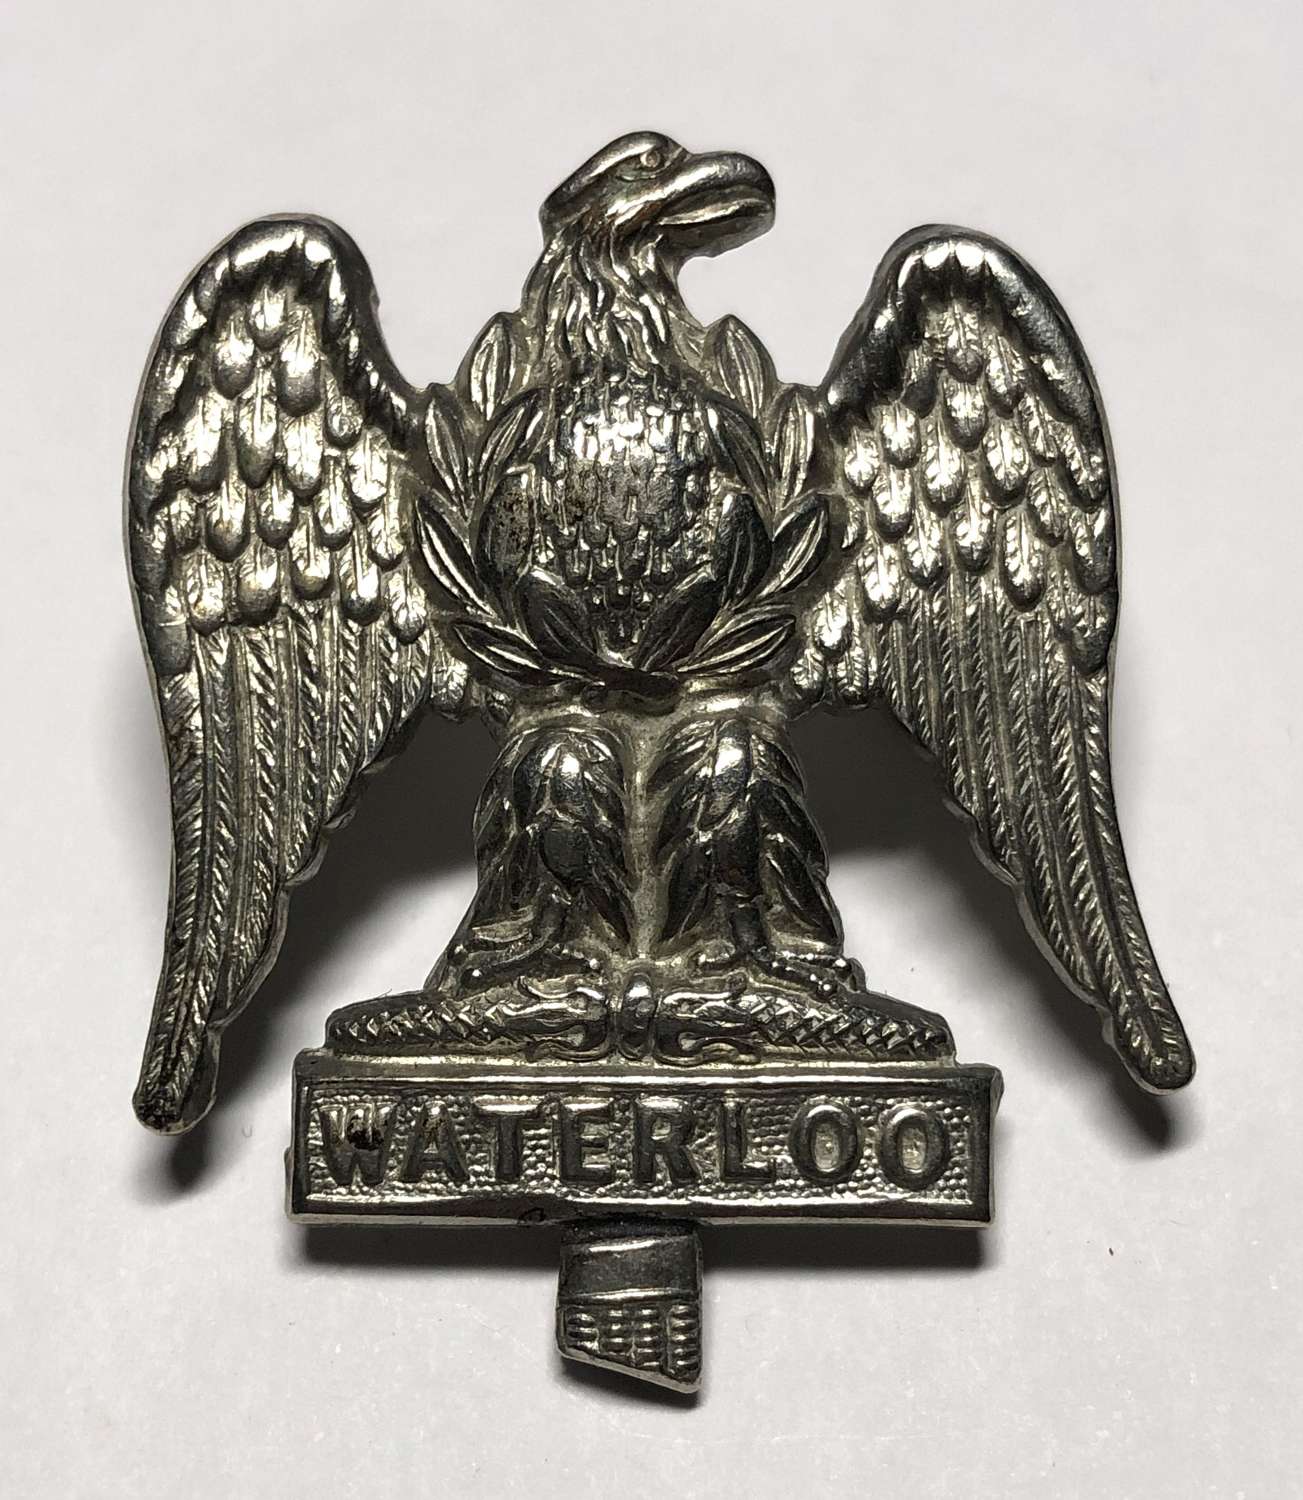 Royal Scots Greys WW2 era NCO's small arm badge